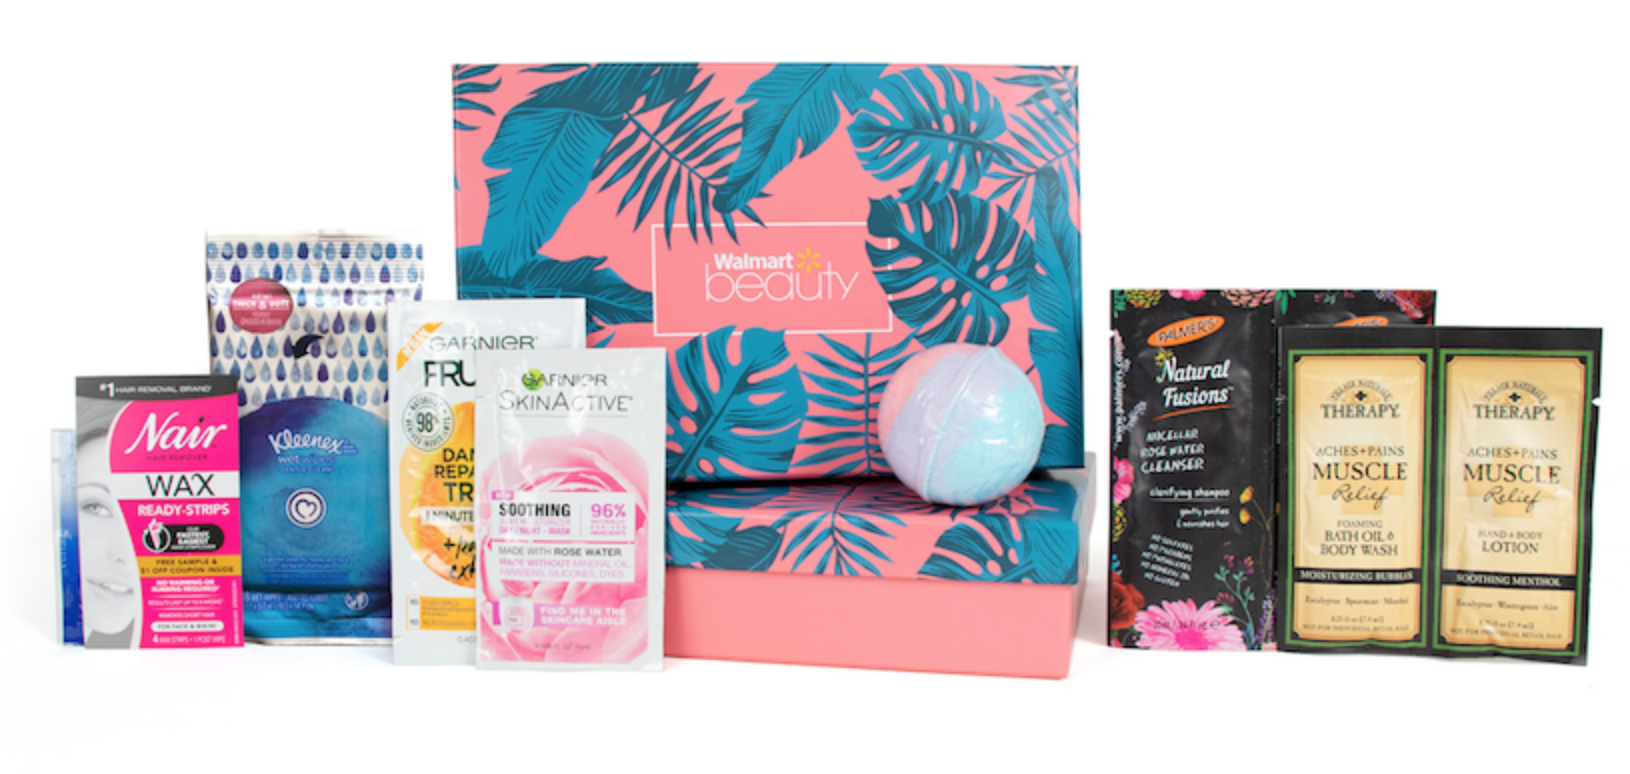 Walmart Beauty Box Summer 2018 Box – Available Now!